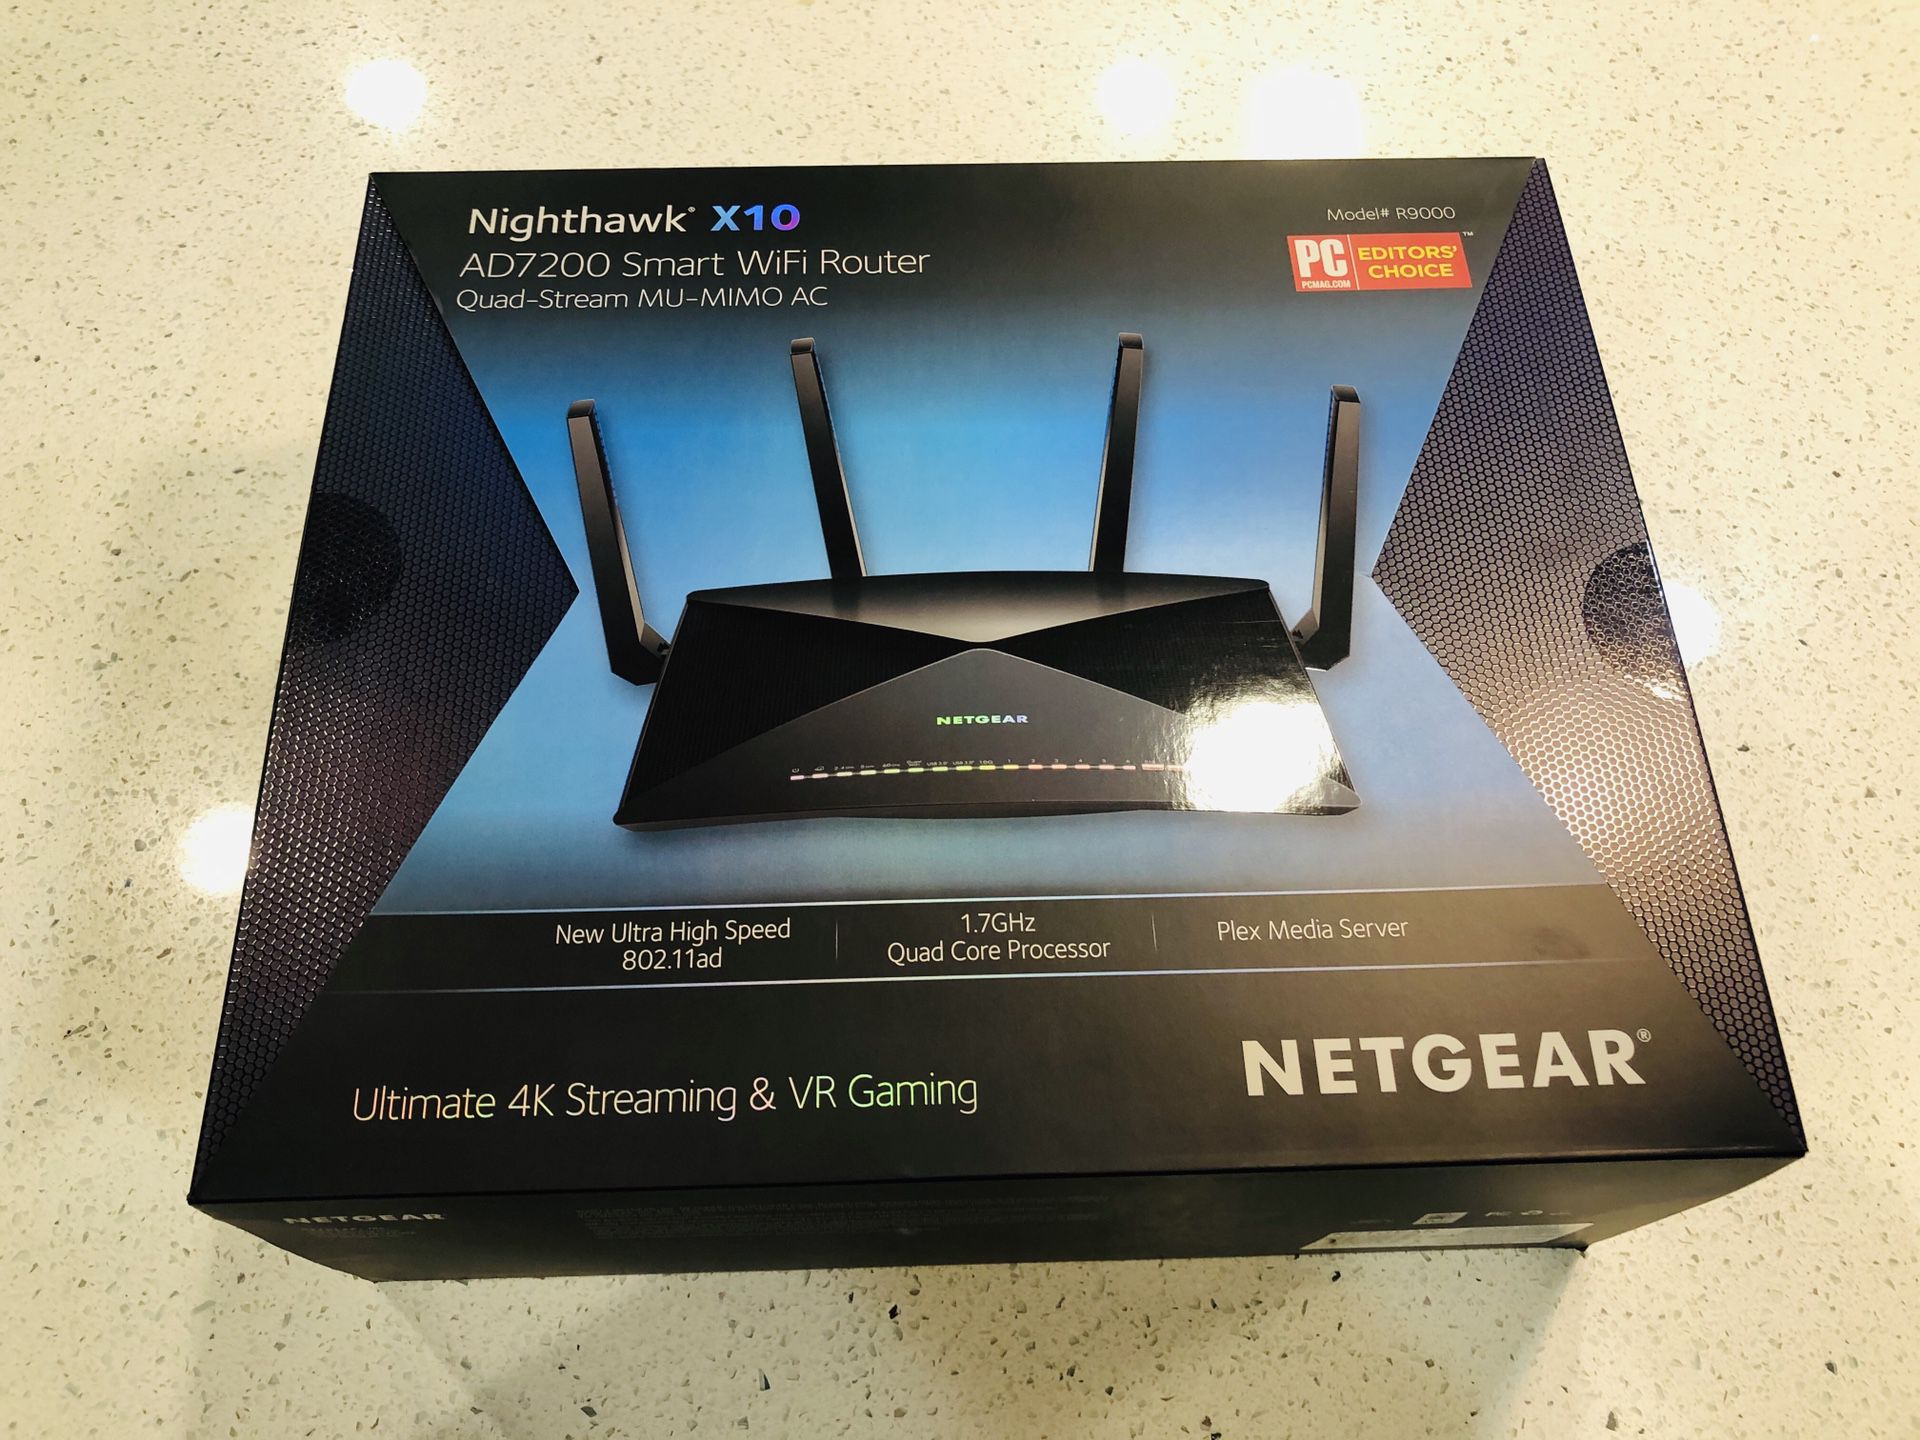 NETGEAR Nighthawk X10 AD7200 Smart WiFi Router